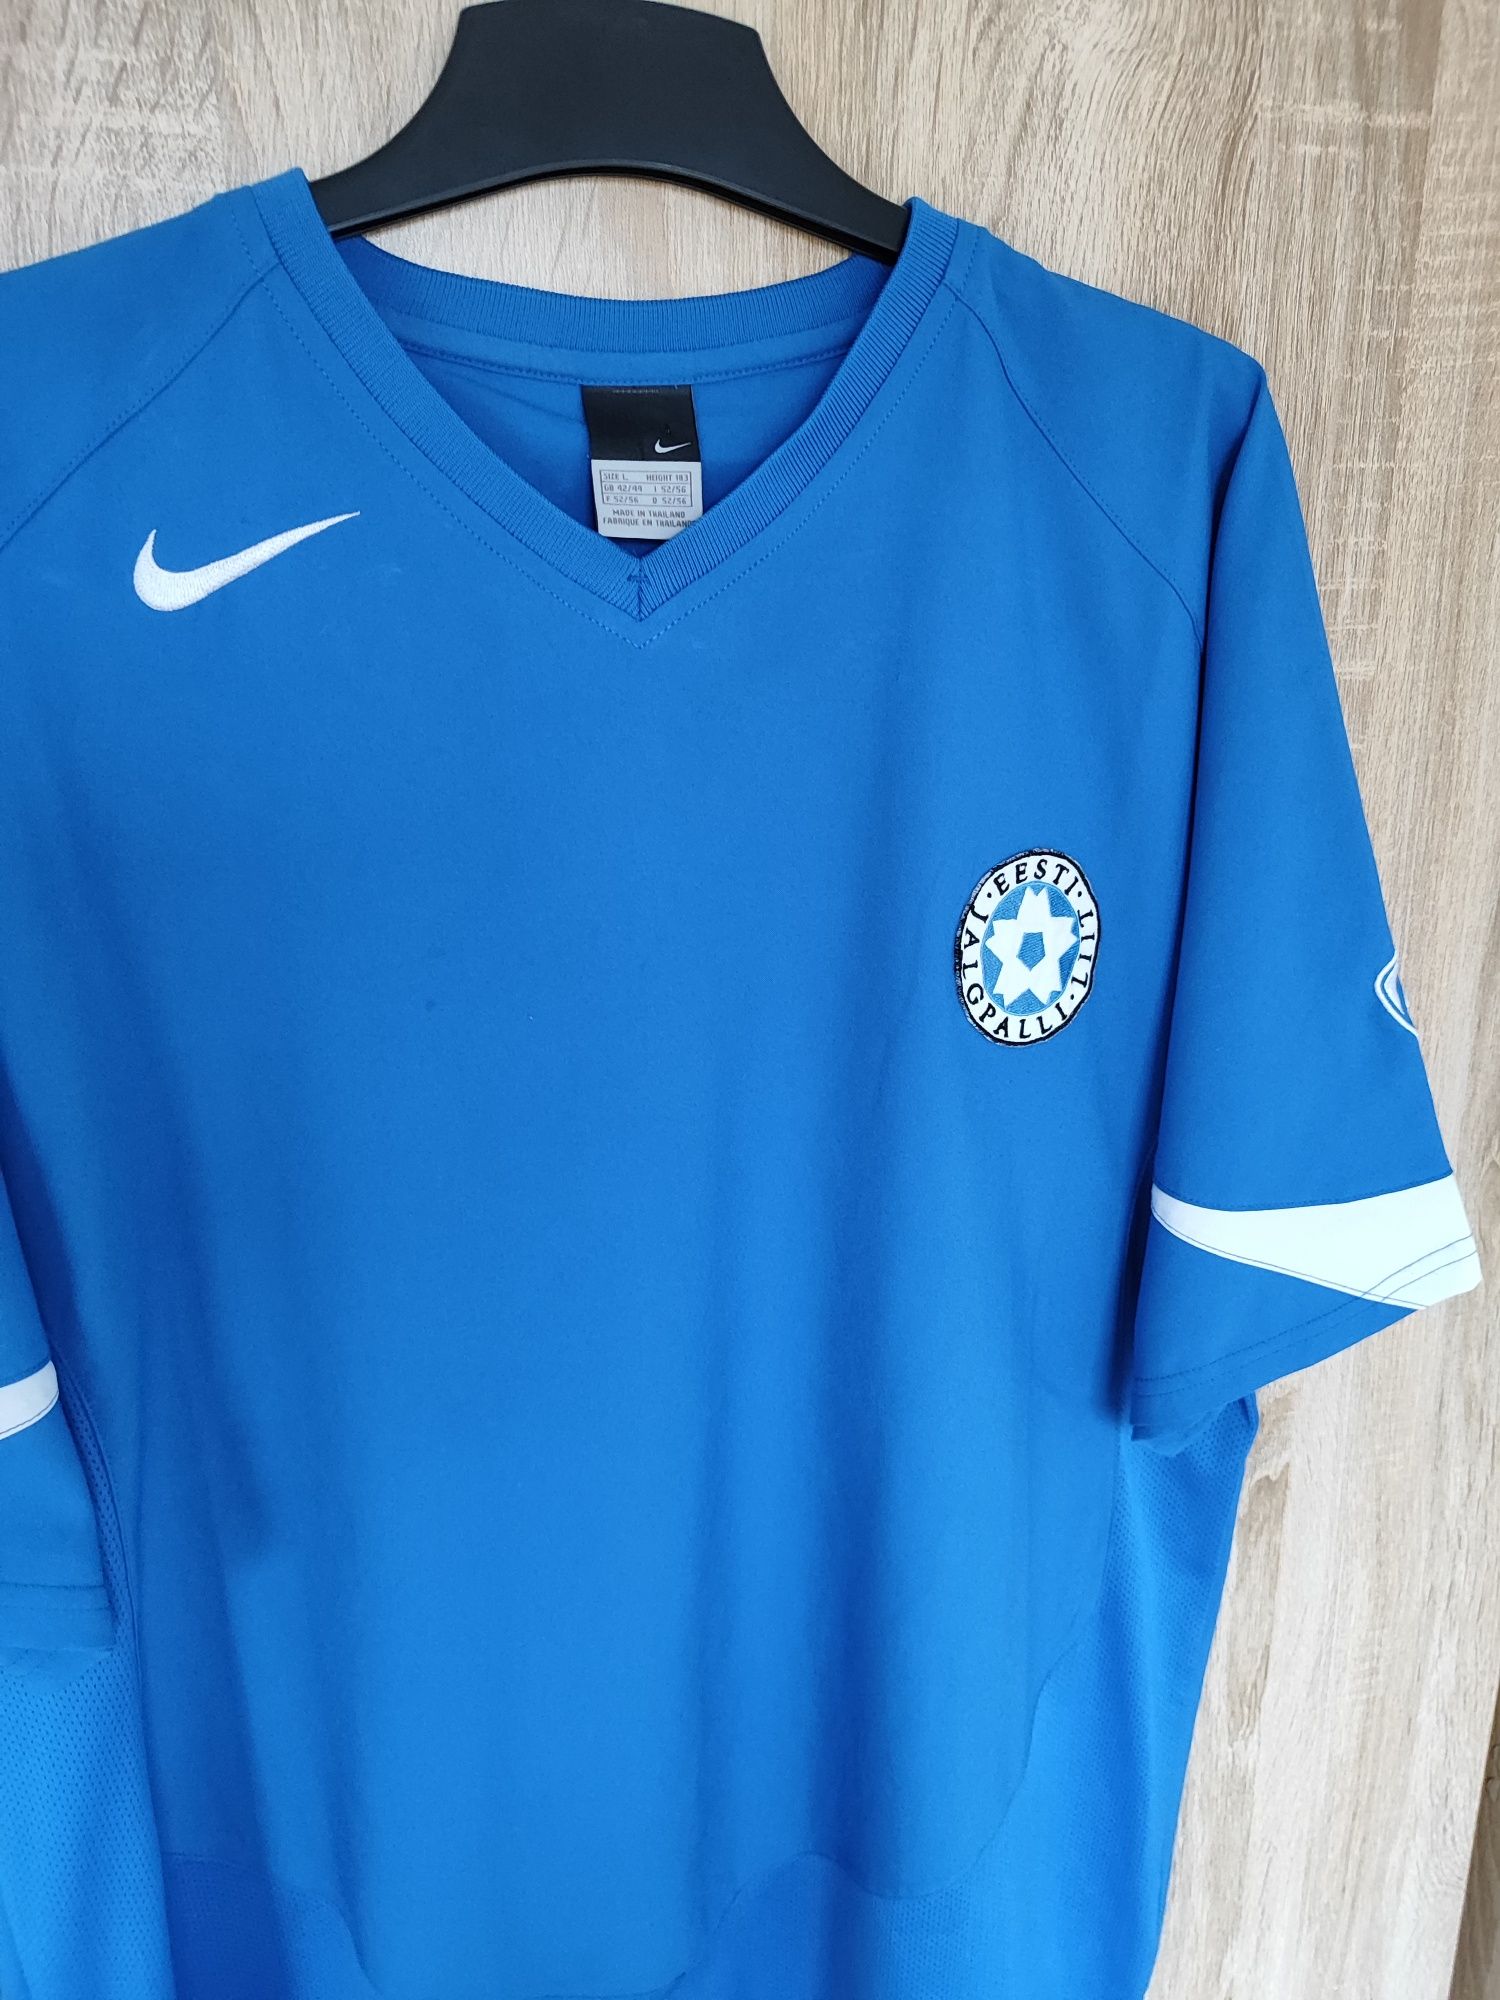 Koszulka piłkarska męska Nike Reprezentacja Estonia 2004/05 rozmiar L